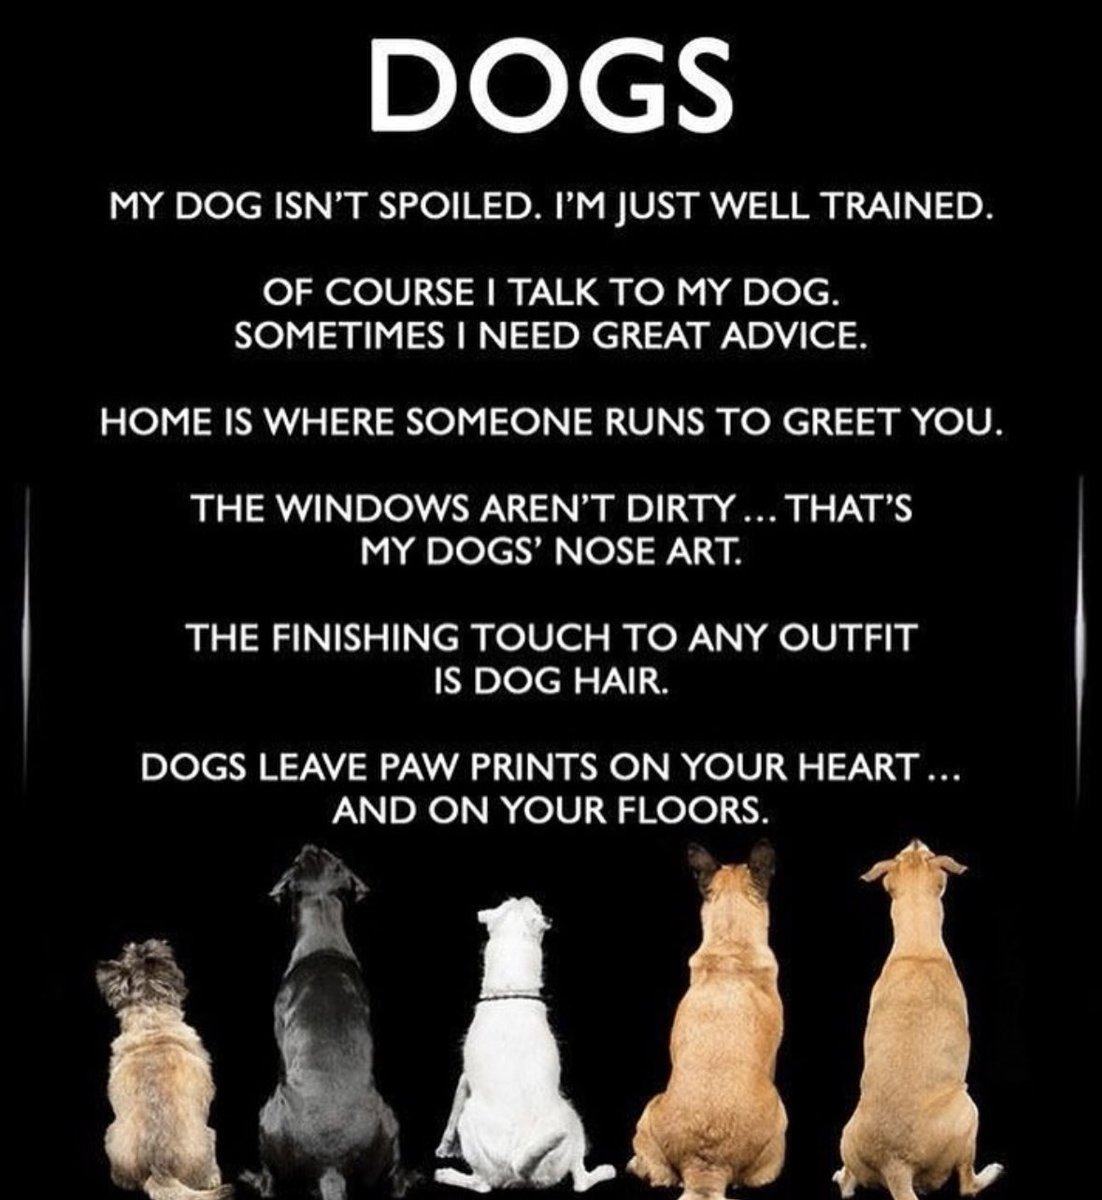 #doglover #doglovers #dogsofinstagram #dog #dogs #lovedogs #familypet #familypets #unconditionallove #loyality #comfort #truthbetold